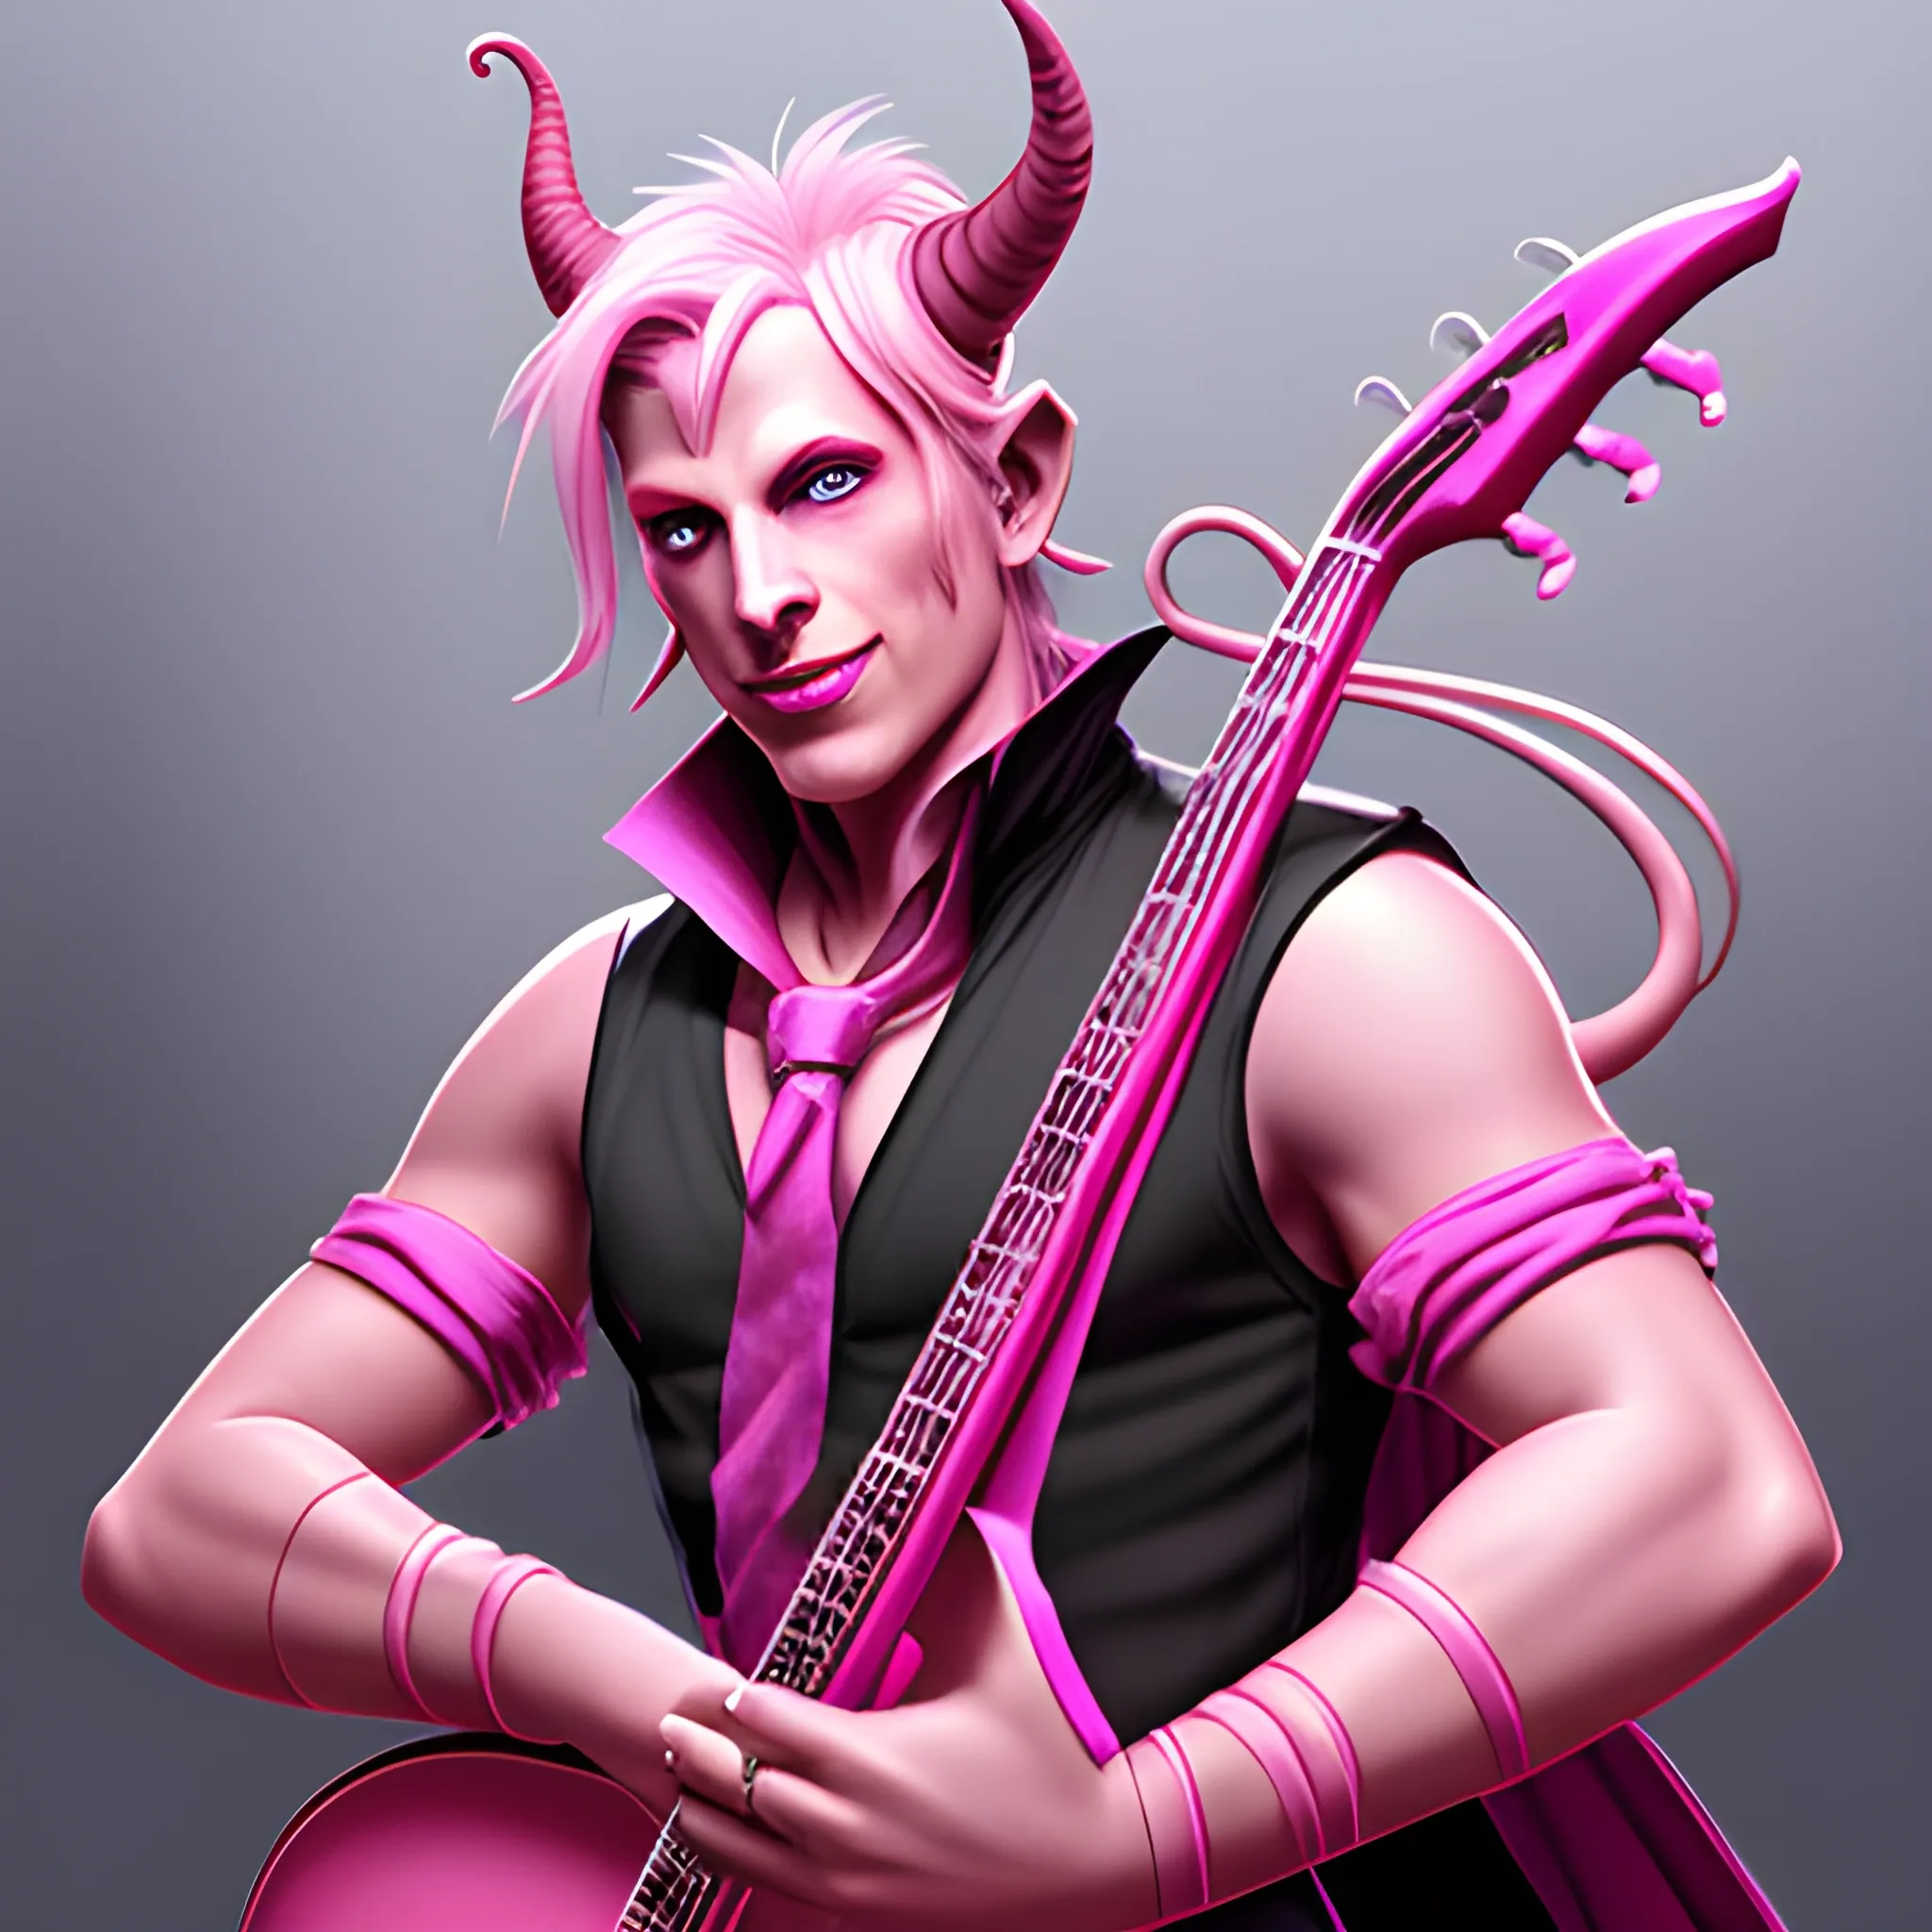 Pink tiefling man, musician, final fantasy